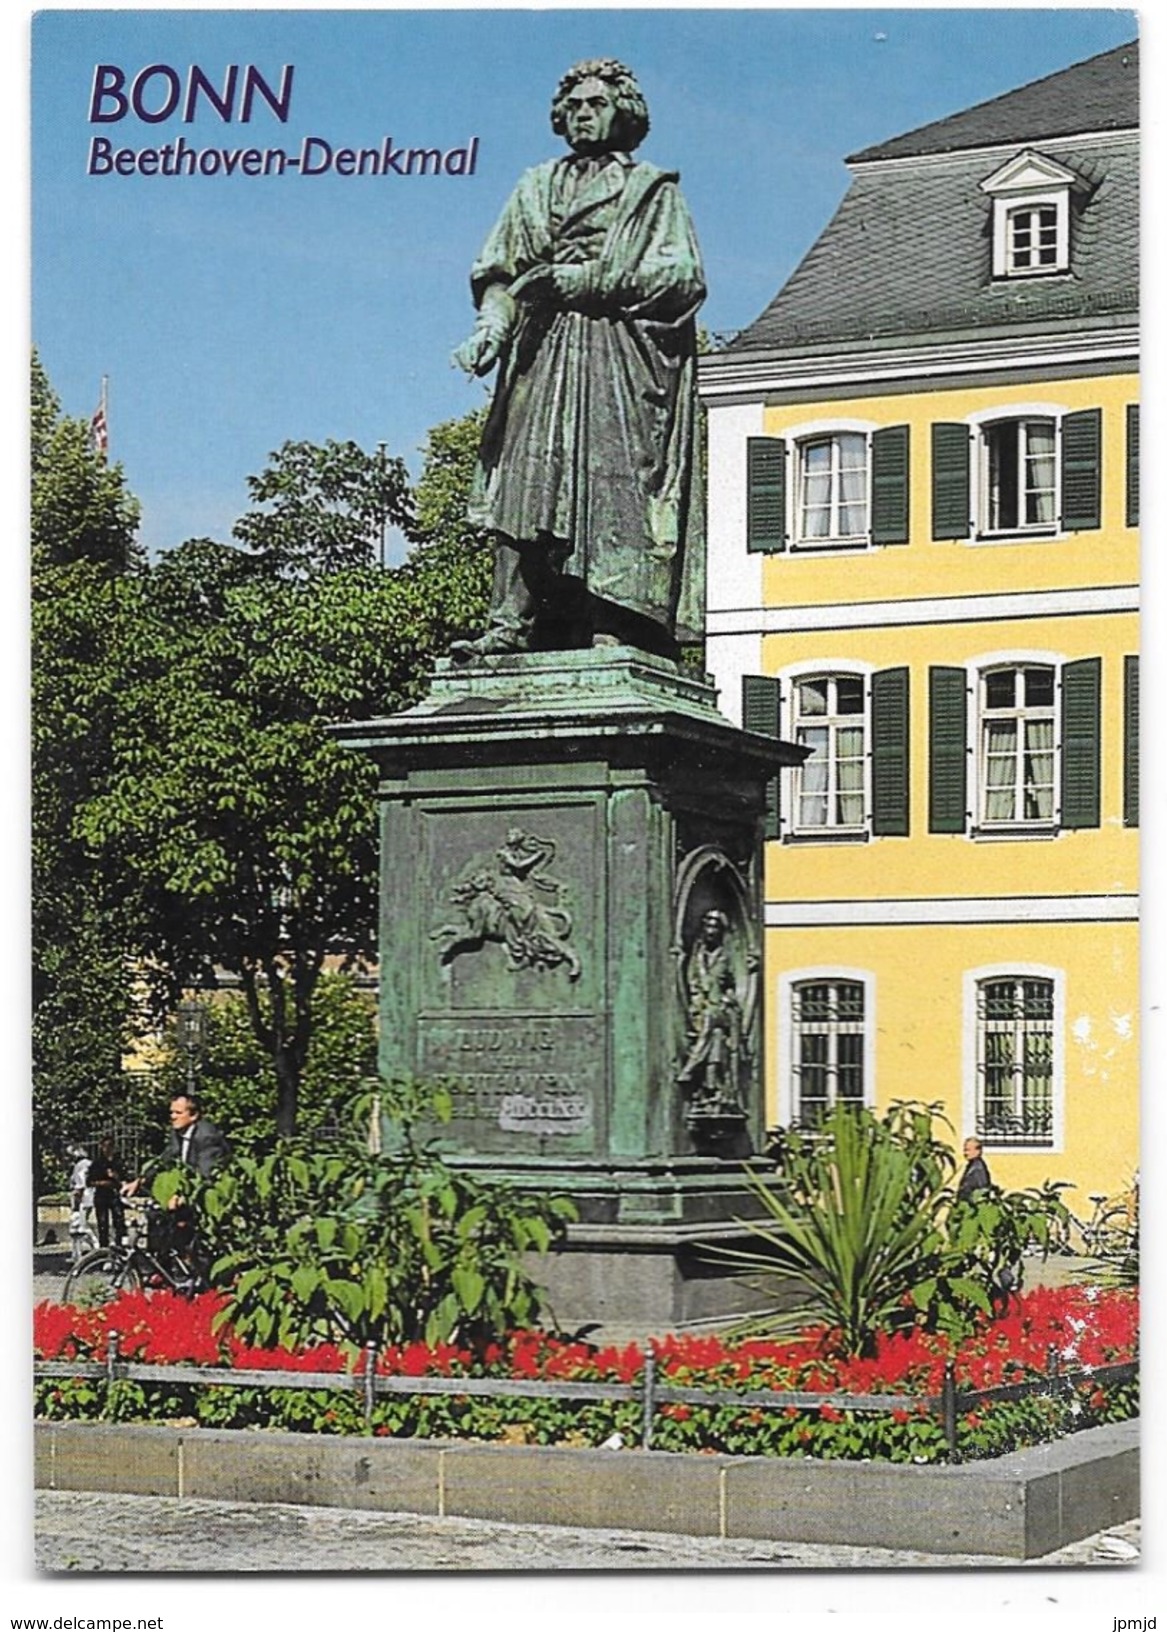 BONN Am Rhein - Beethoven Denkmal Auf Dem Münsterplatz - Rahmel Verlag Nr BF 36 - 1997 - Bonn